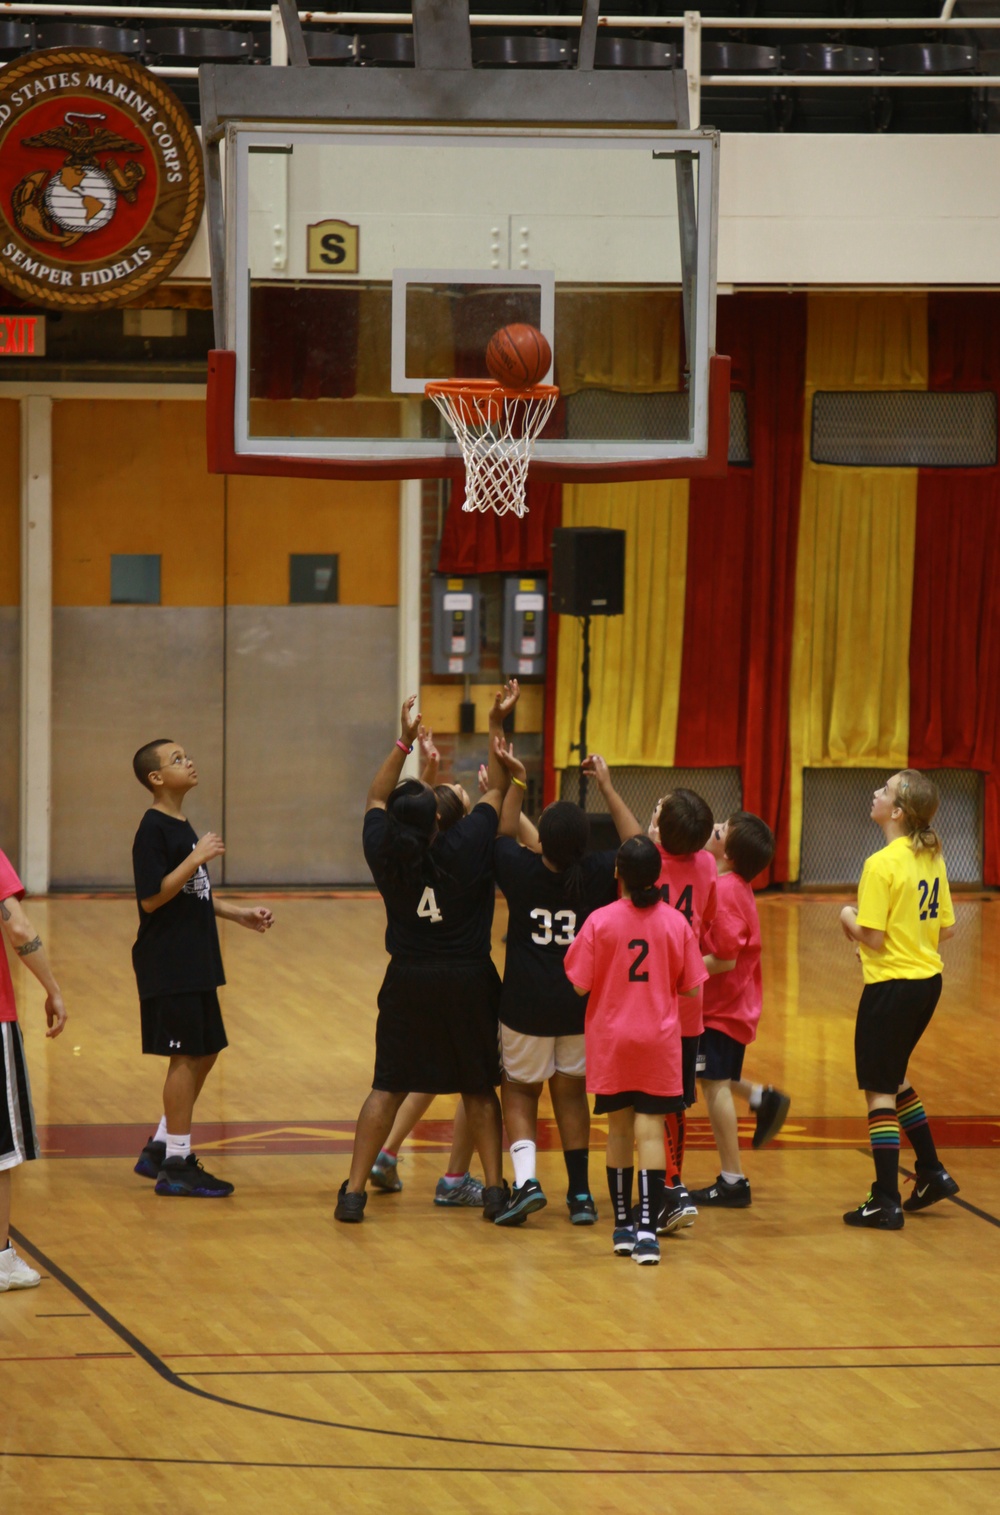 Basketball gateway to youth mentoring program